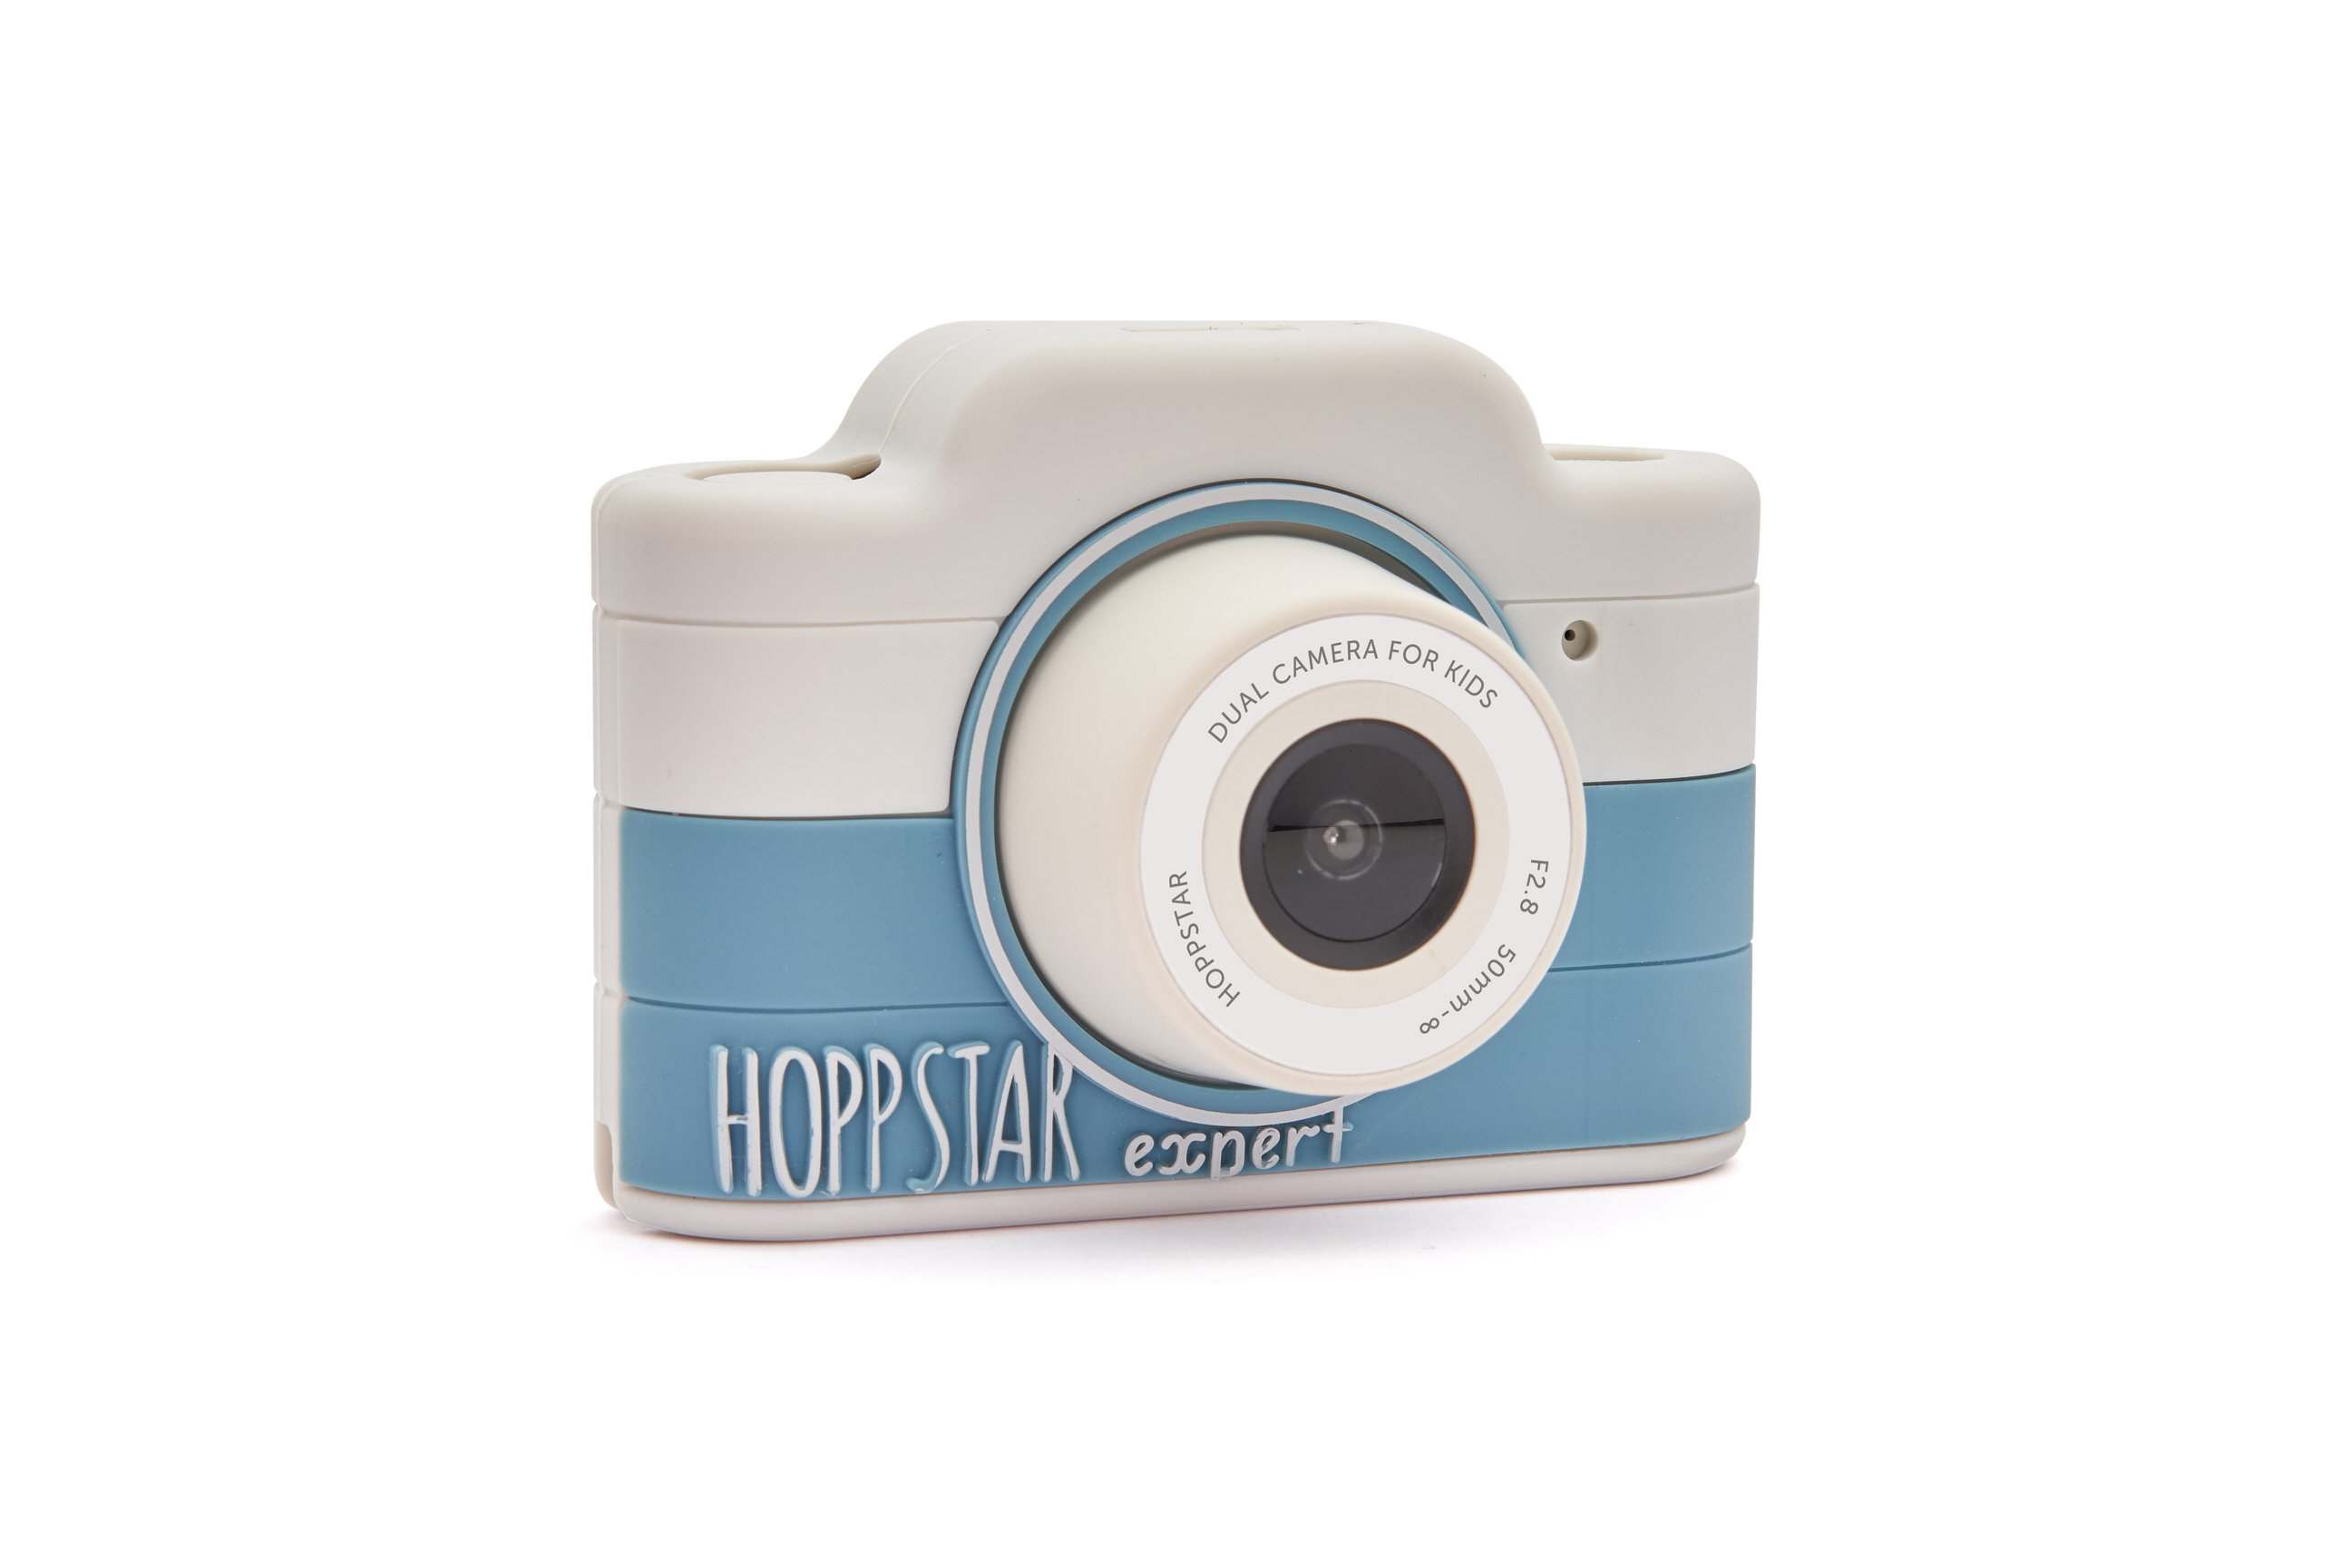 Hoppstar Expert Kamera mit Yale (blau/weiß) Silikonhülle, Frontalansicht leicht schräg